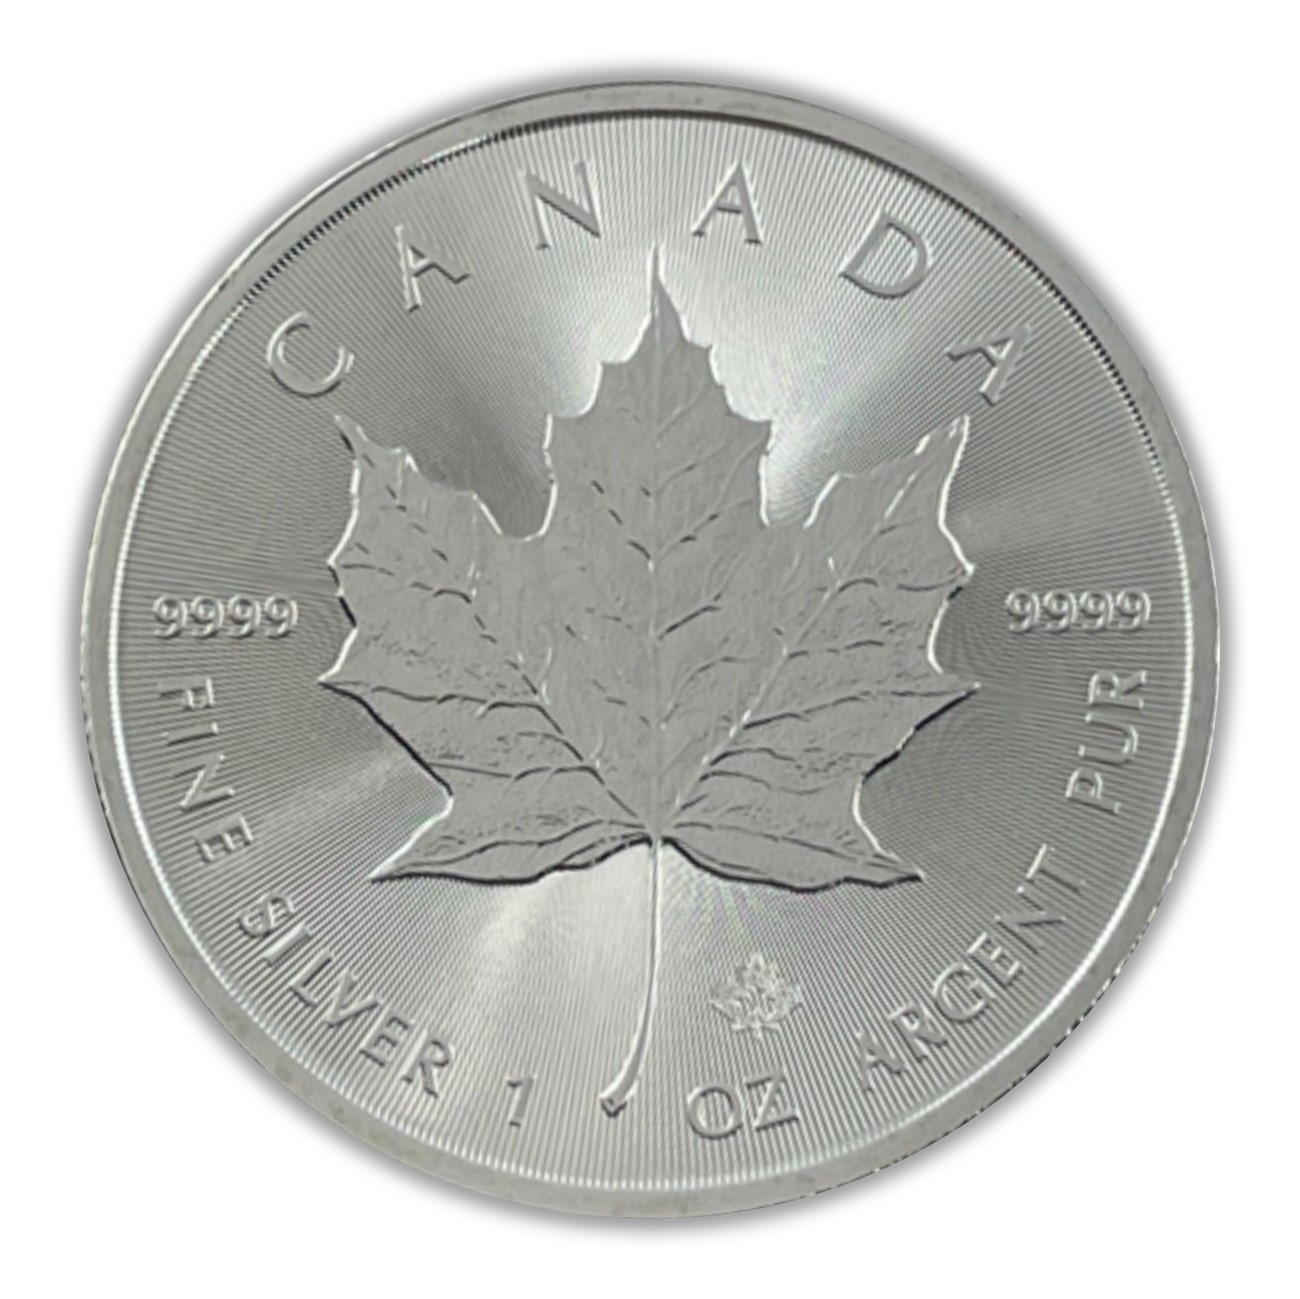 Canadian Maple 1 oz Silver Coin - Random Year